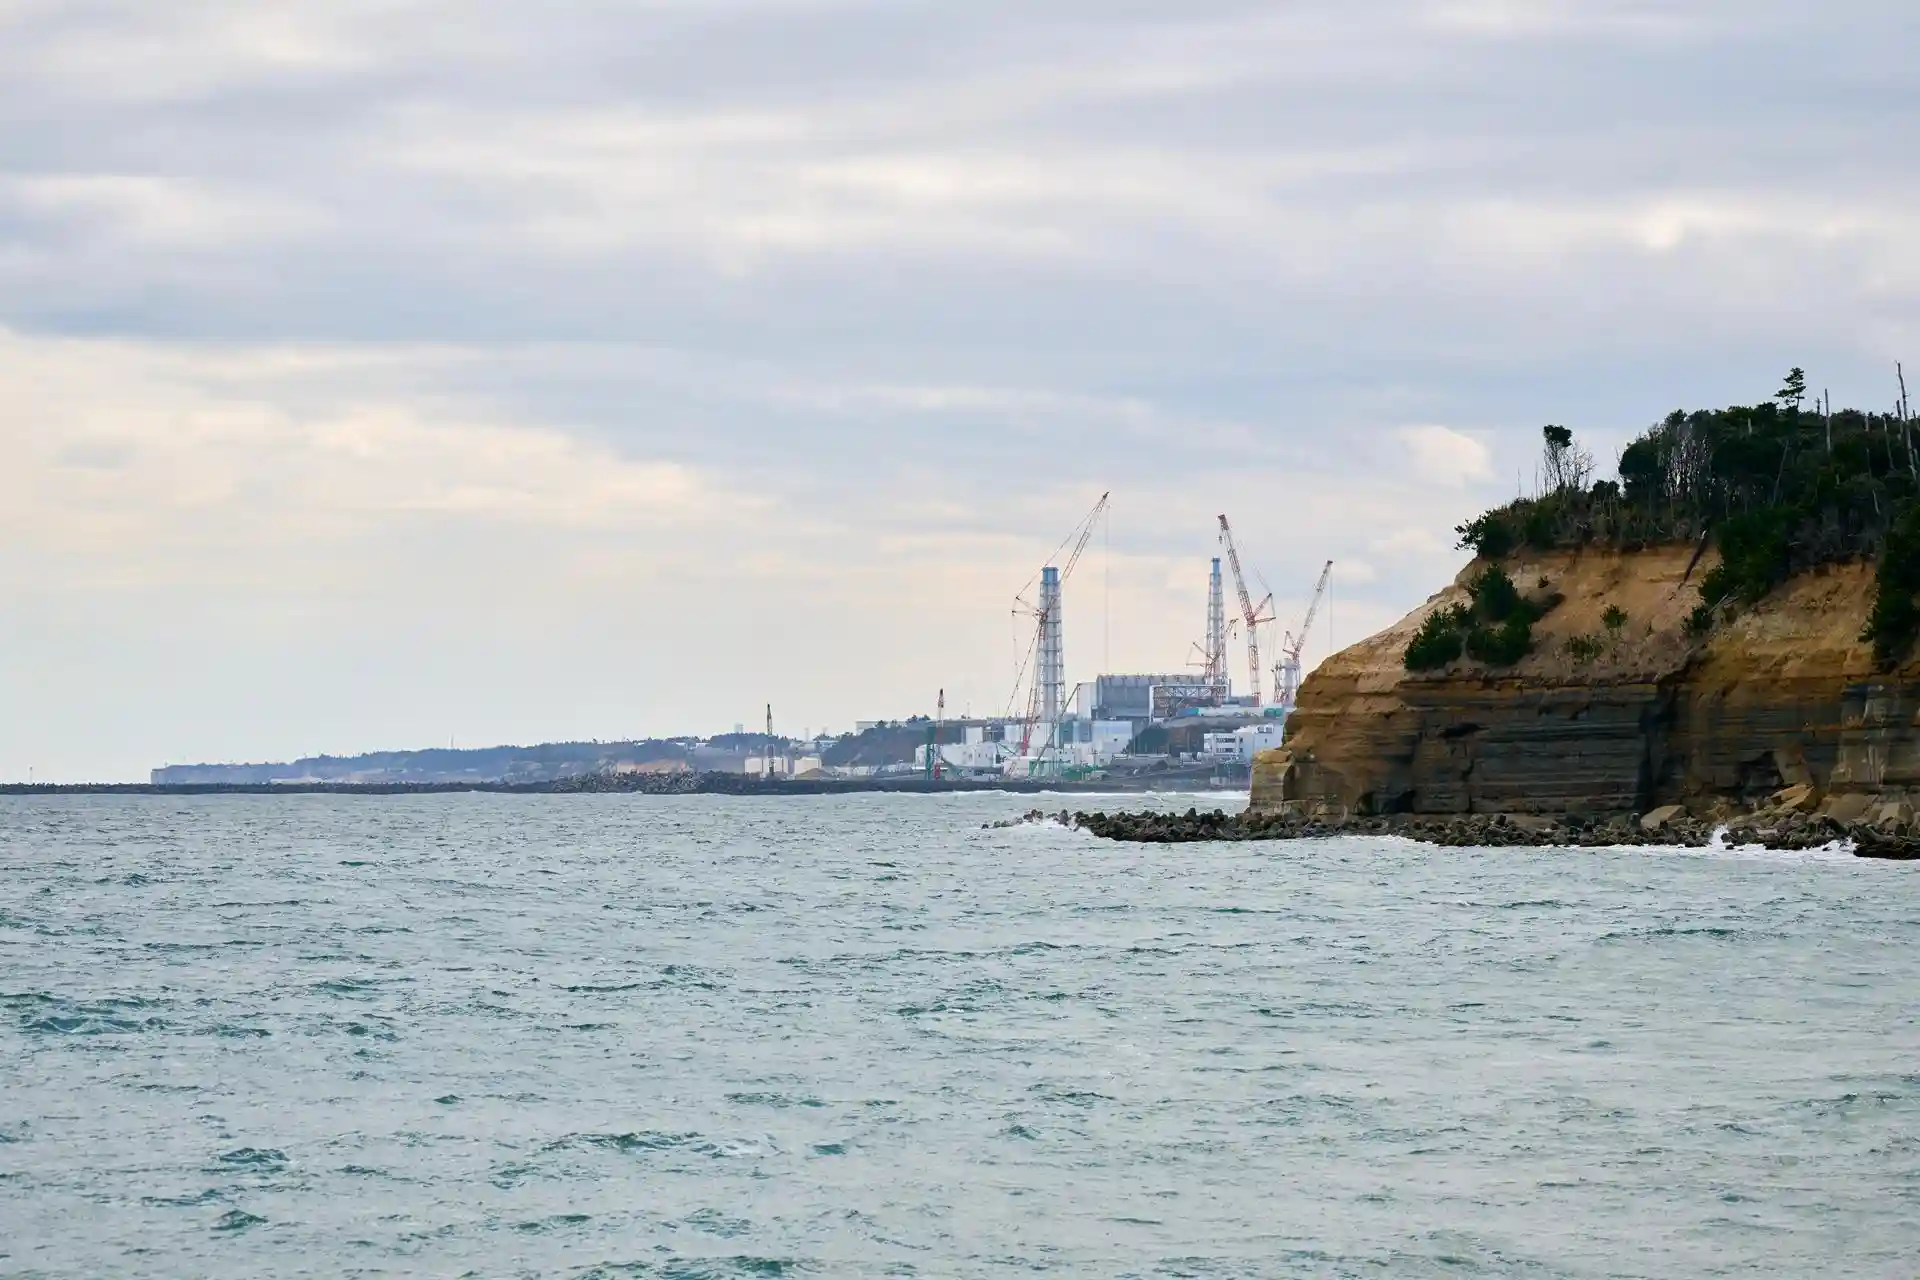 La central nuclear de Fukushima autorizada a lanzar al mar el agua radiactiva tratada / Foto: EP